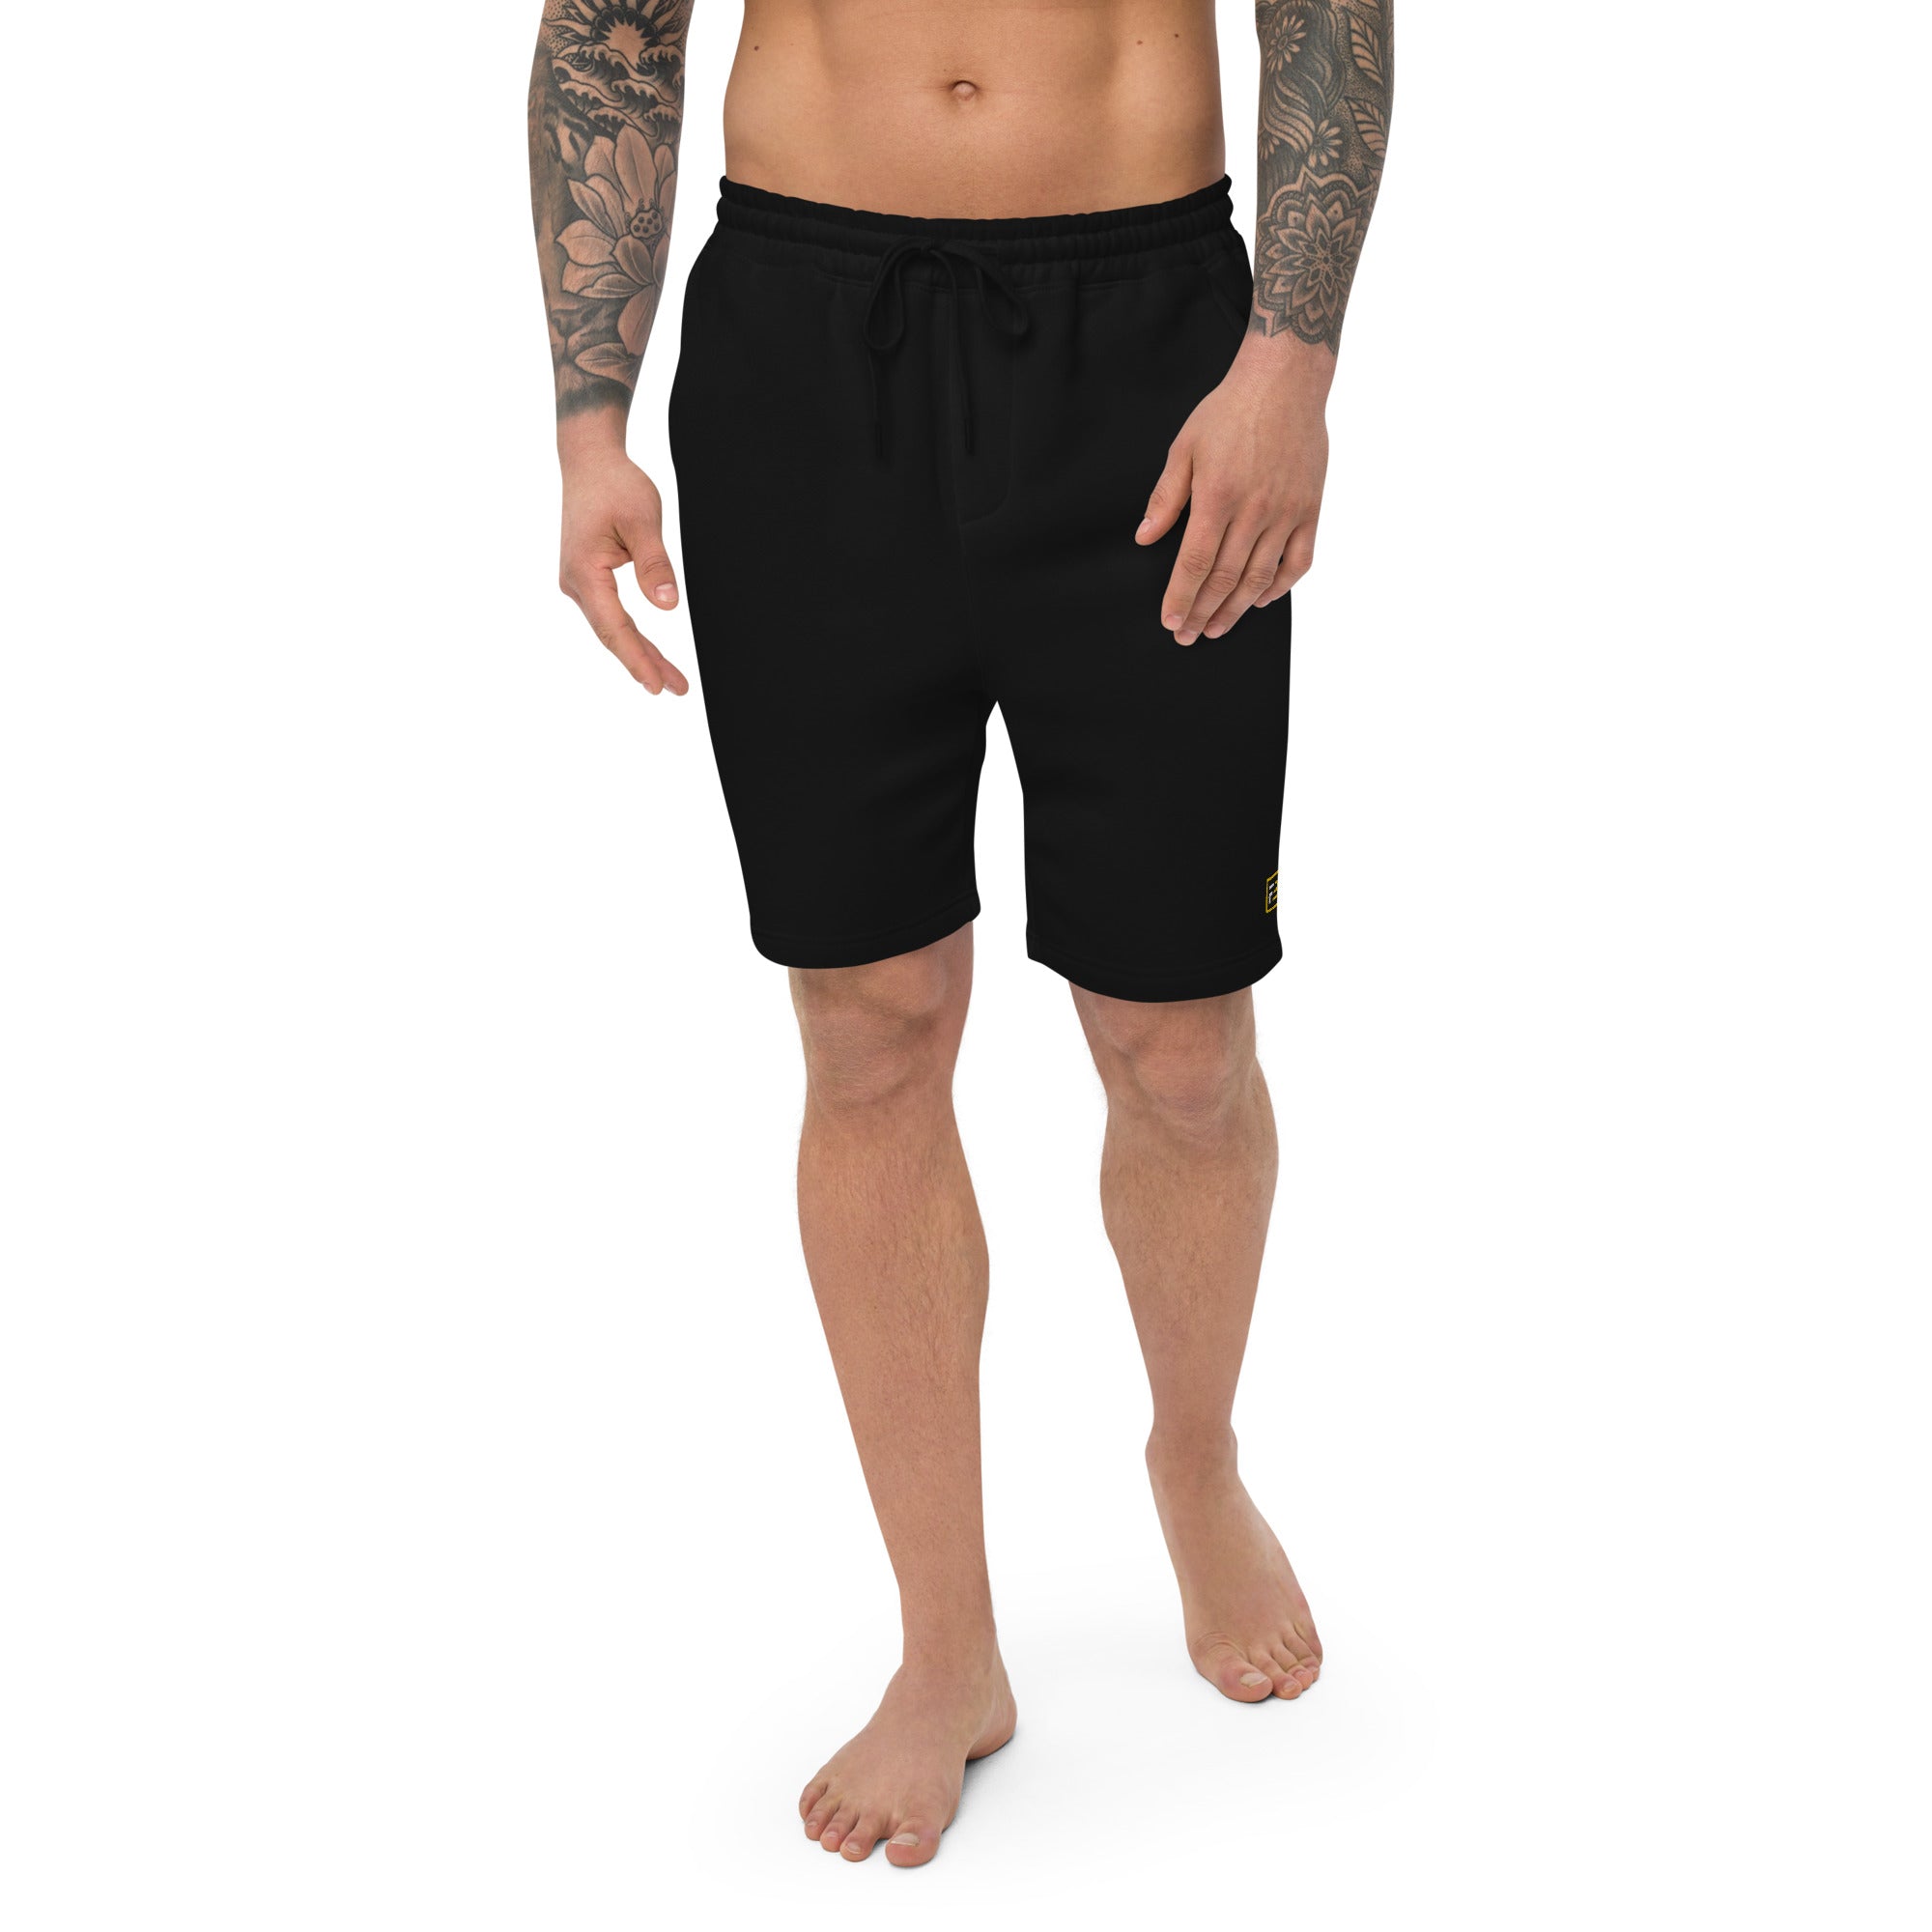 Fleece FB Jog shorts